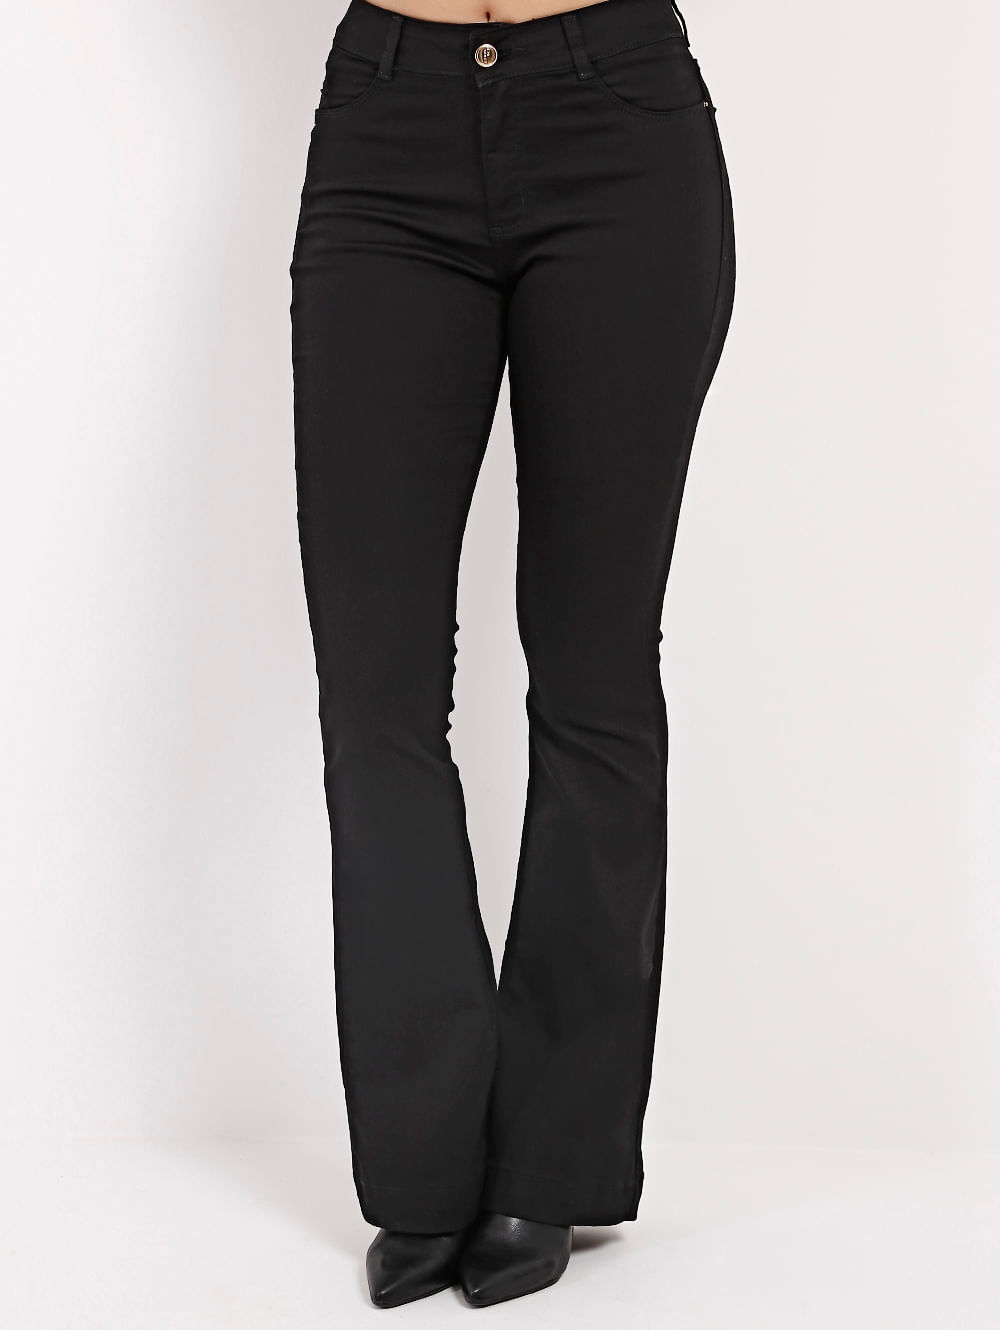 calça feminina preta jeans